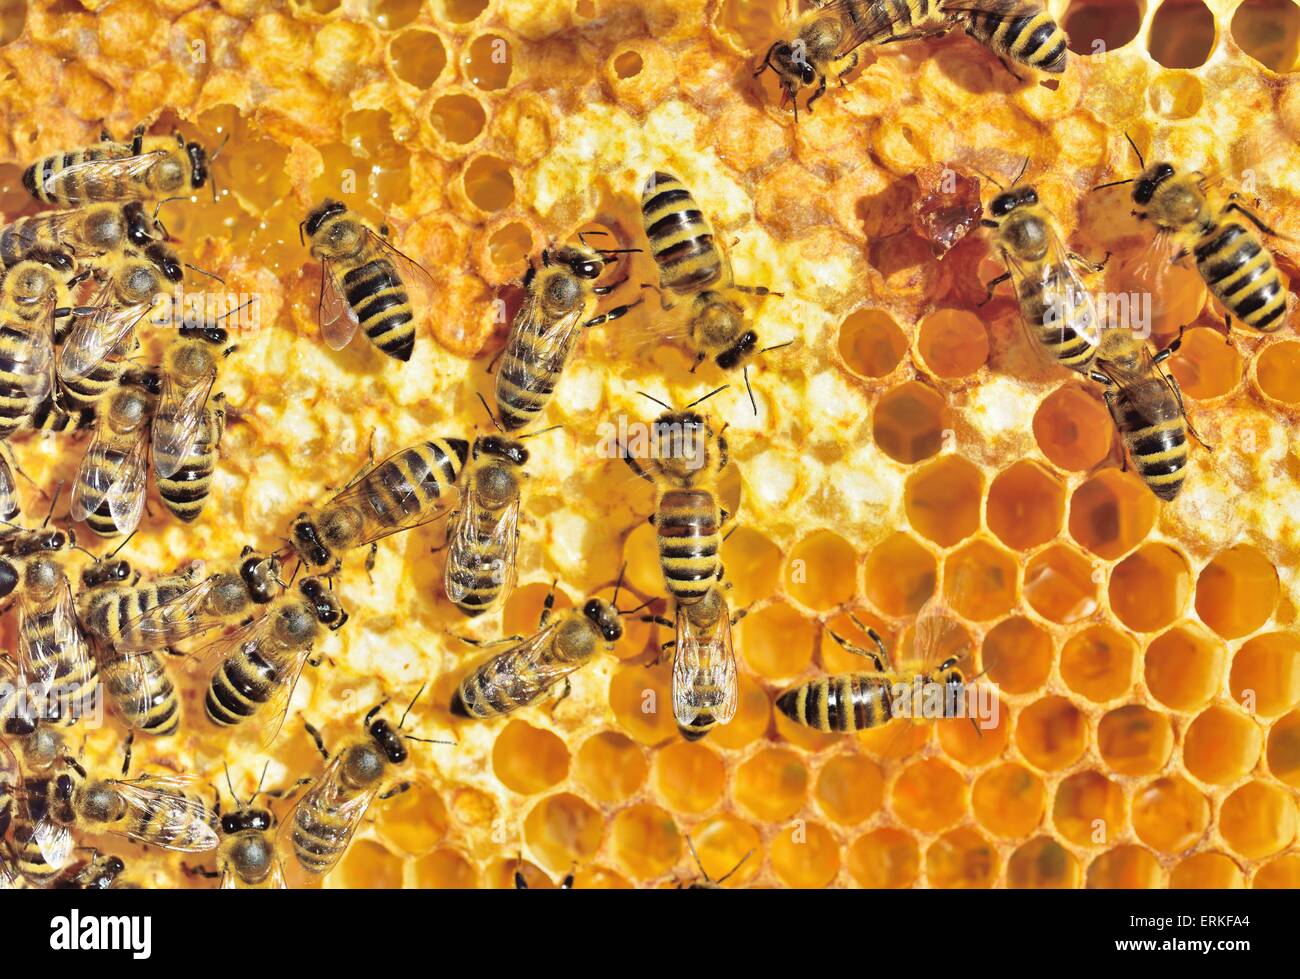 European Honey Bees (Apis mellifera var. carnica) on honeycomb with fresh honey in cells, Bavaria, Germany Stock Photo